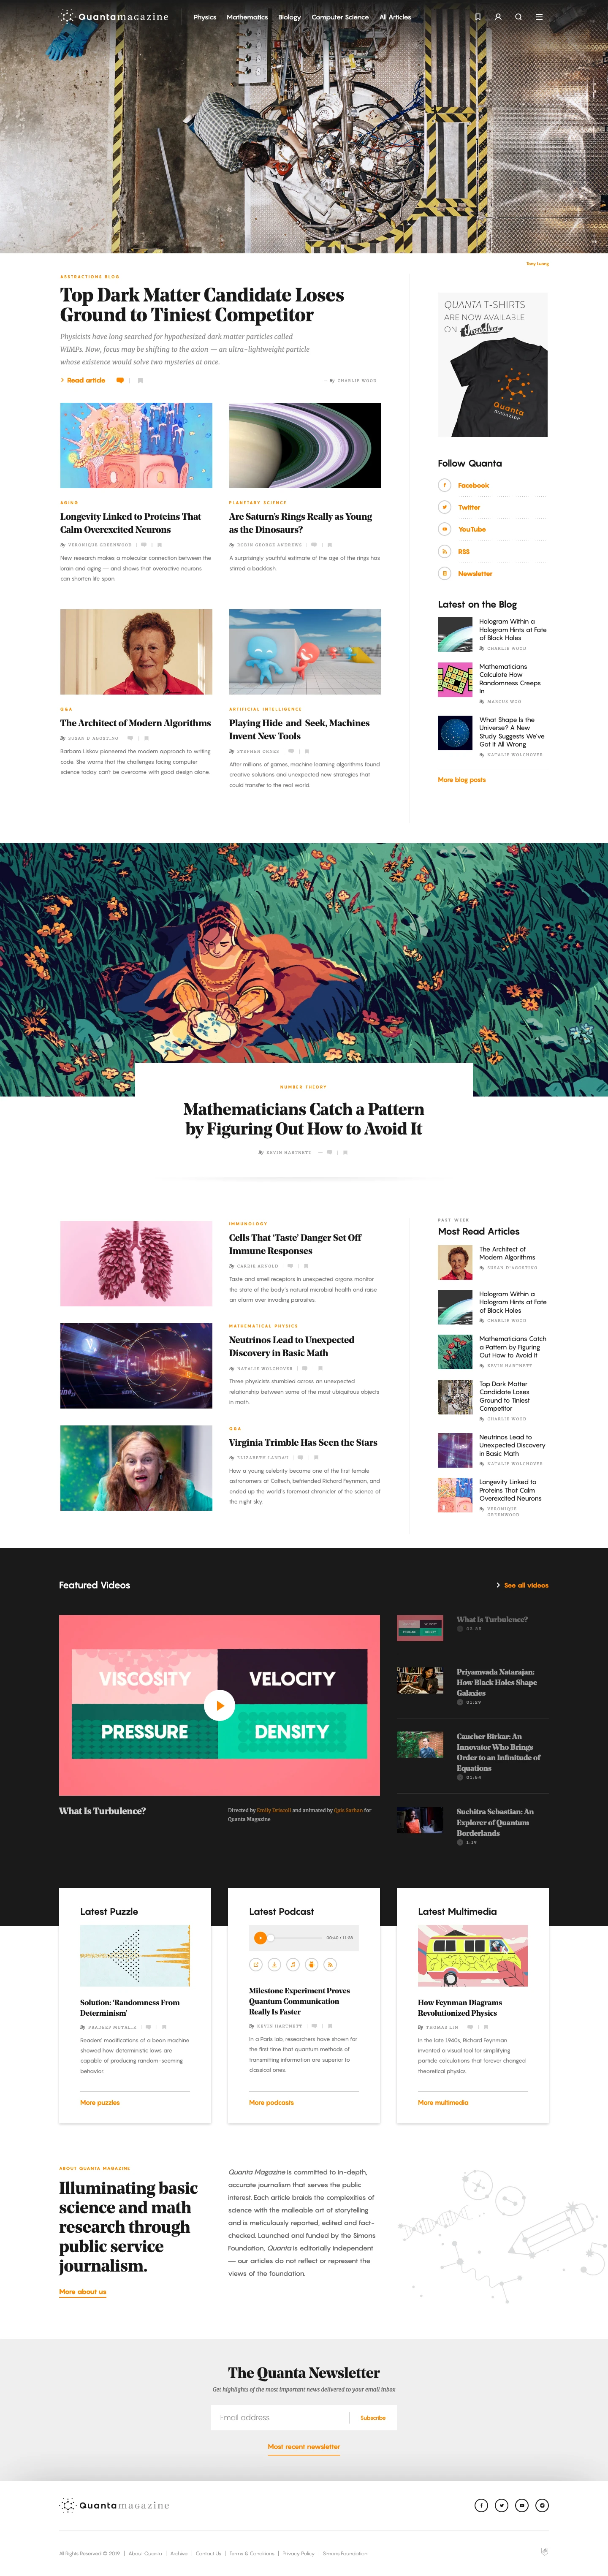 Quanta Magazine Landing Page Example: Illuminating mathematics, physics, biology and computer science research through public service journalism.